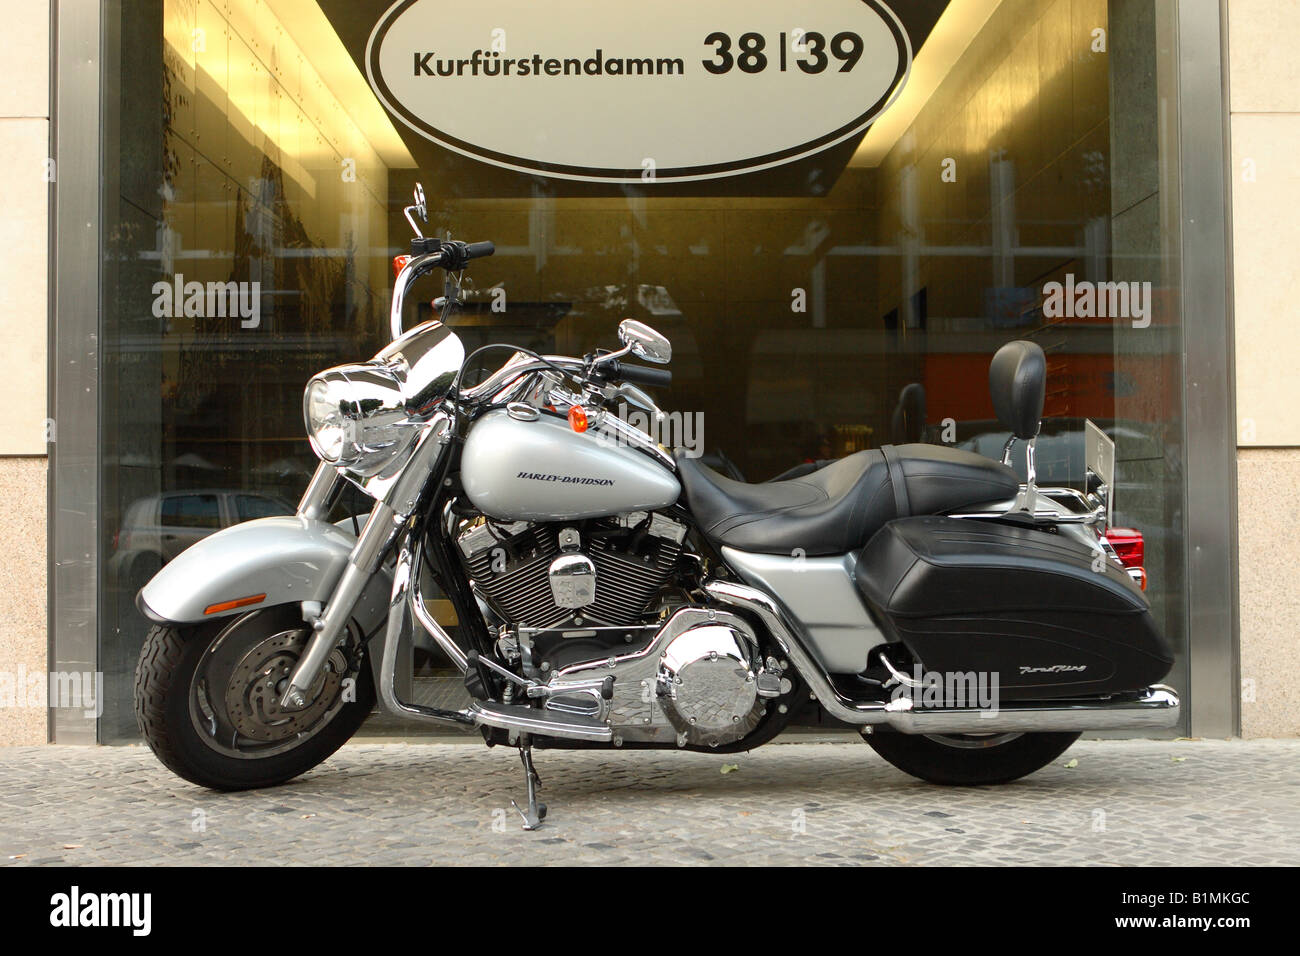 Harley Davidson Road King luxury motoveicolo nella esclusiva Kurfurstendamm boulevard di Berlino Germania Foto Stock